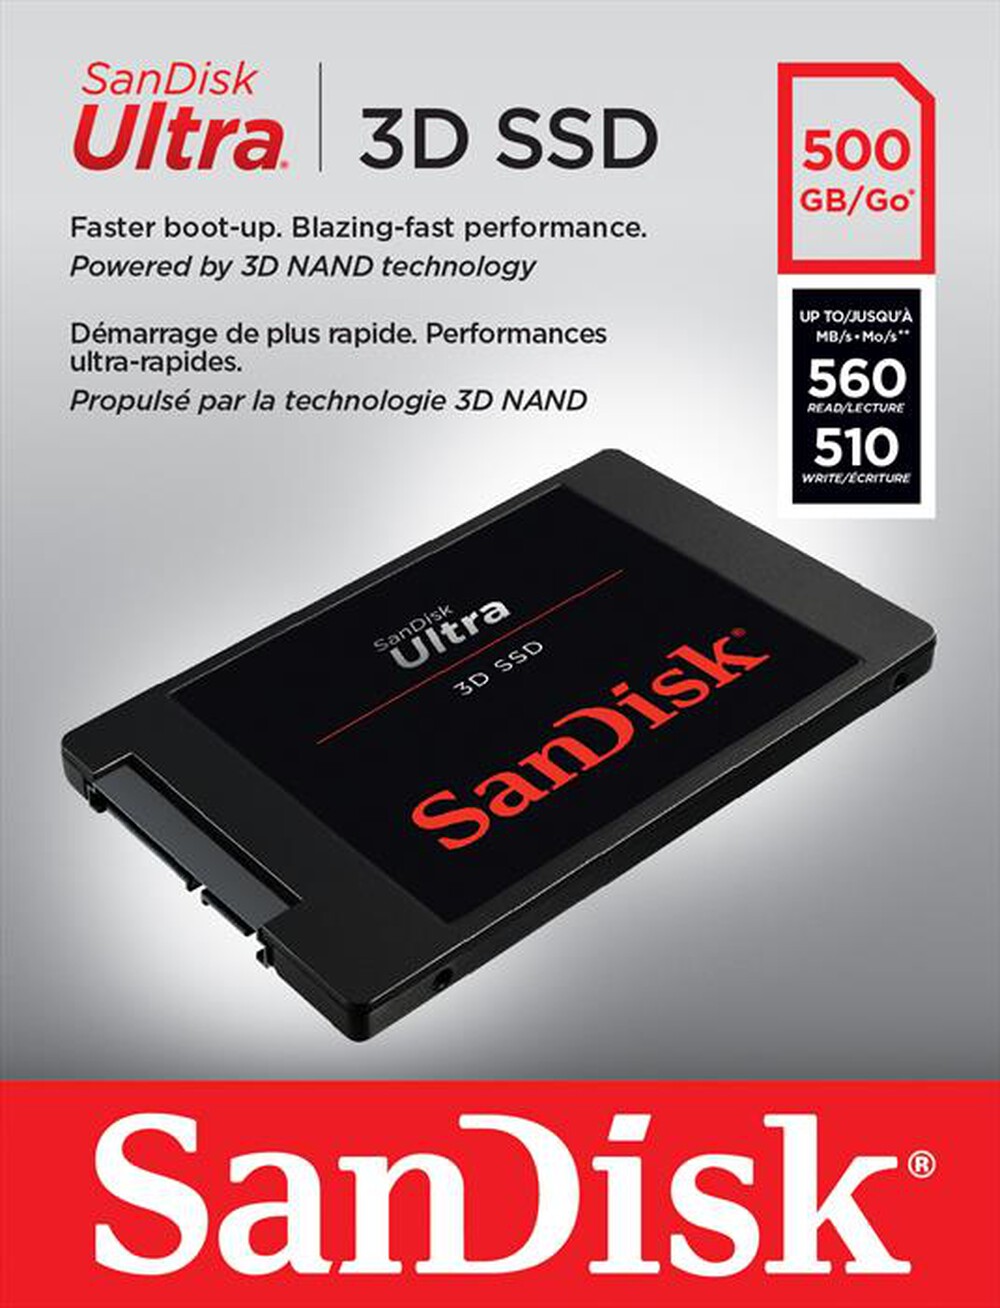 "SANDISK - SSD INTERNA ULTRA 3D 500GB"